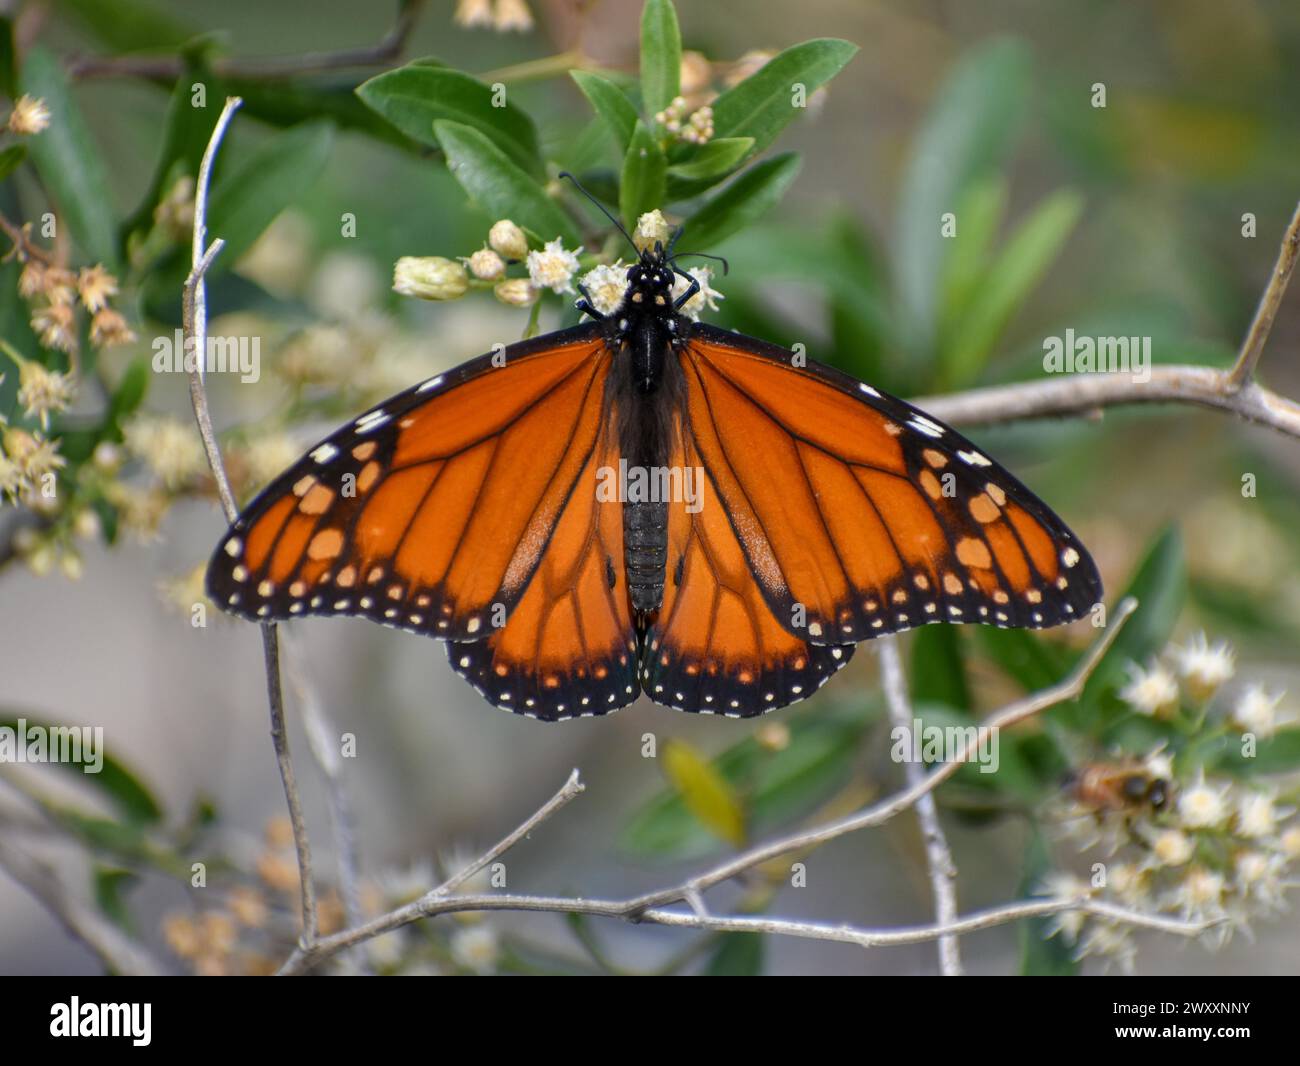 Monarch butterfly (danaus erippus, the sister species of Danaus plexippus) on wildflower Austroeupatorium inulifolium, in Spanish mariposera, seen in Stock Photo